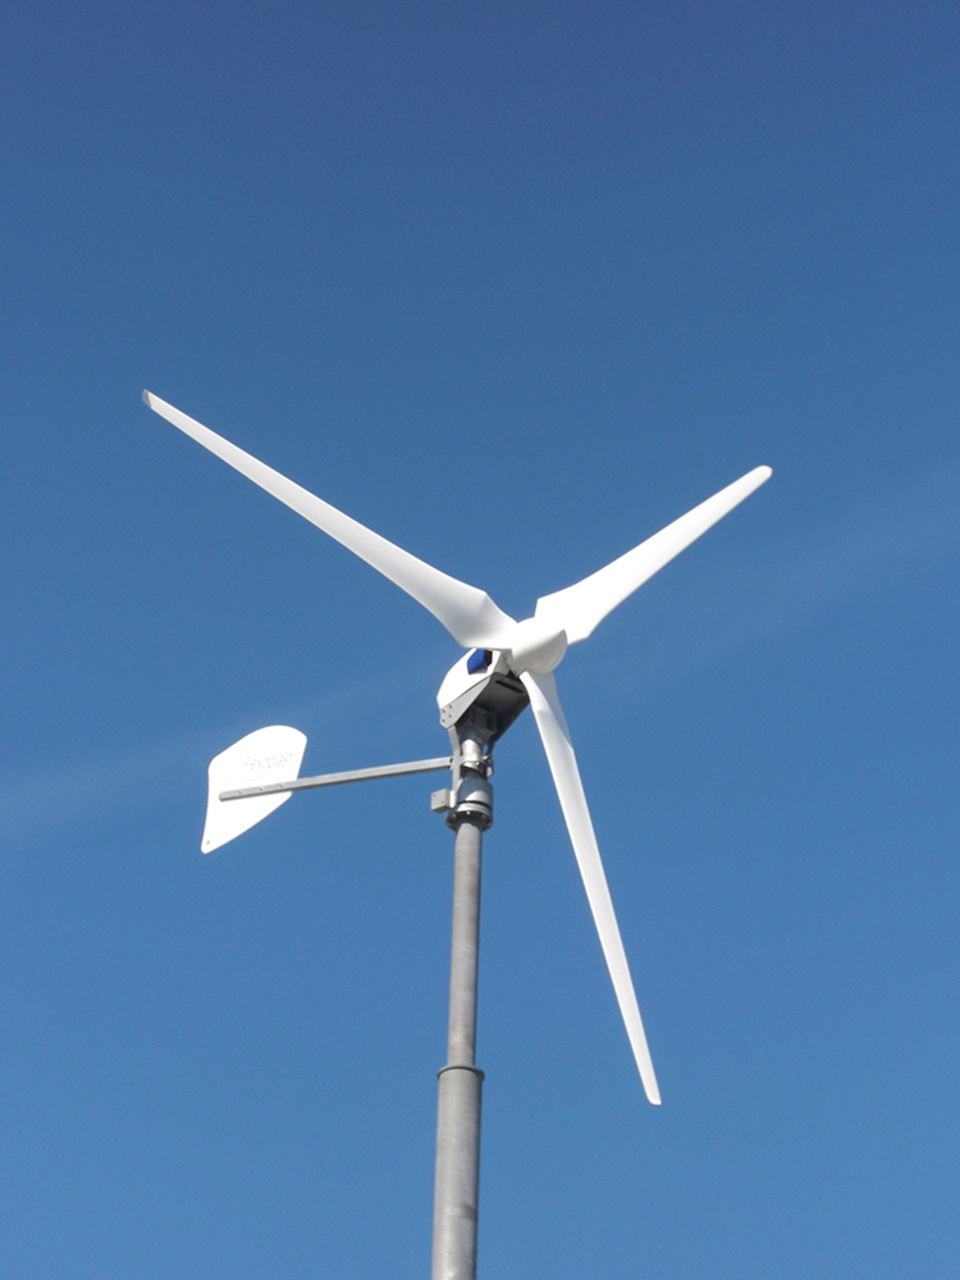 Windkraft2 bei Blessing Elektro in Blaustein-Wippingen